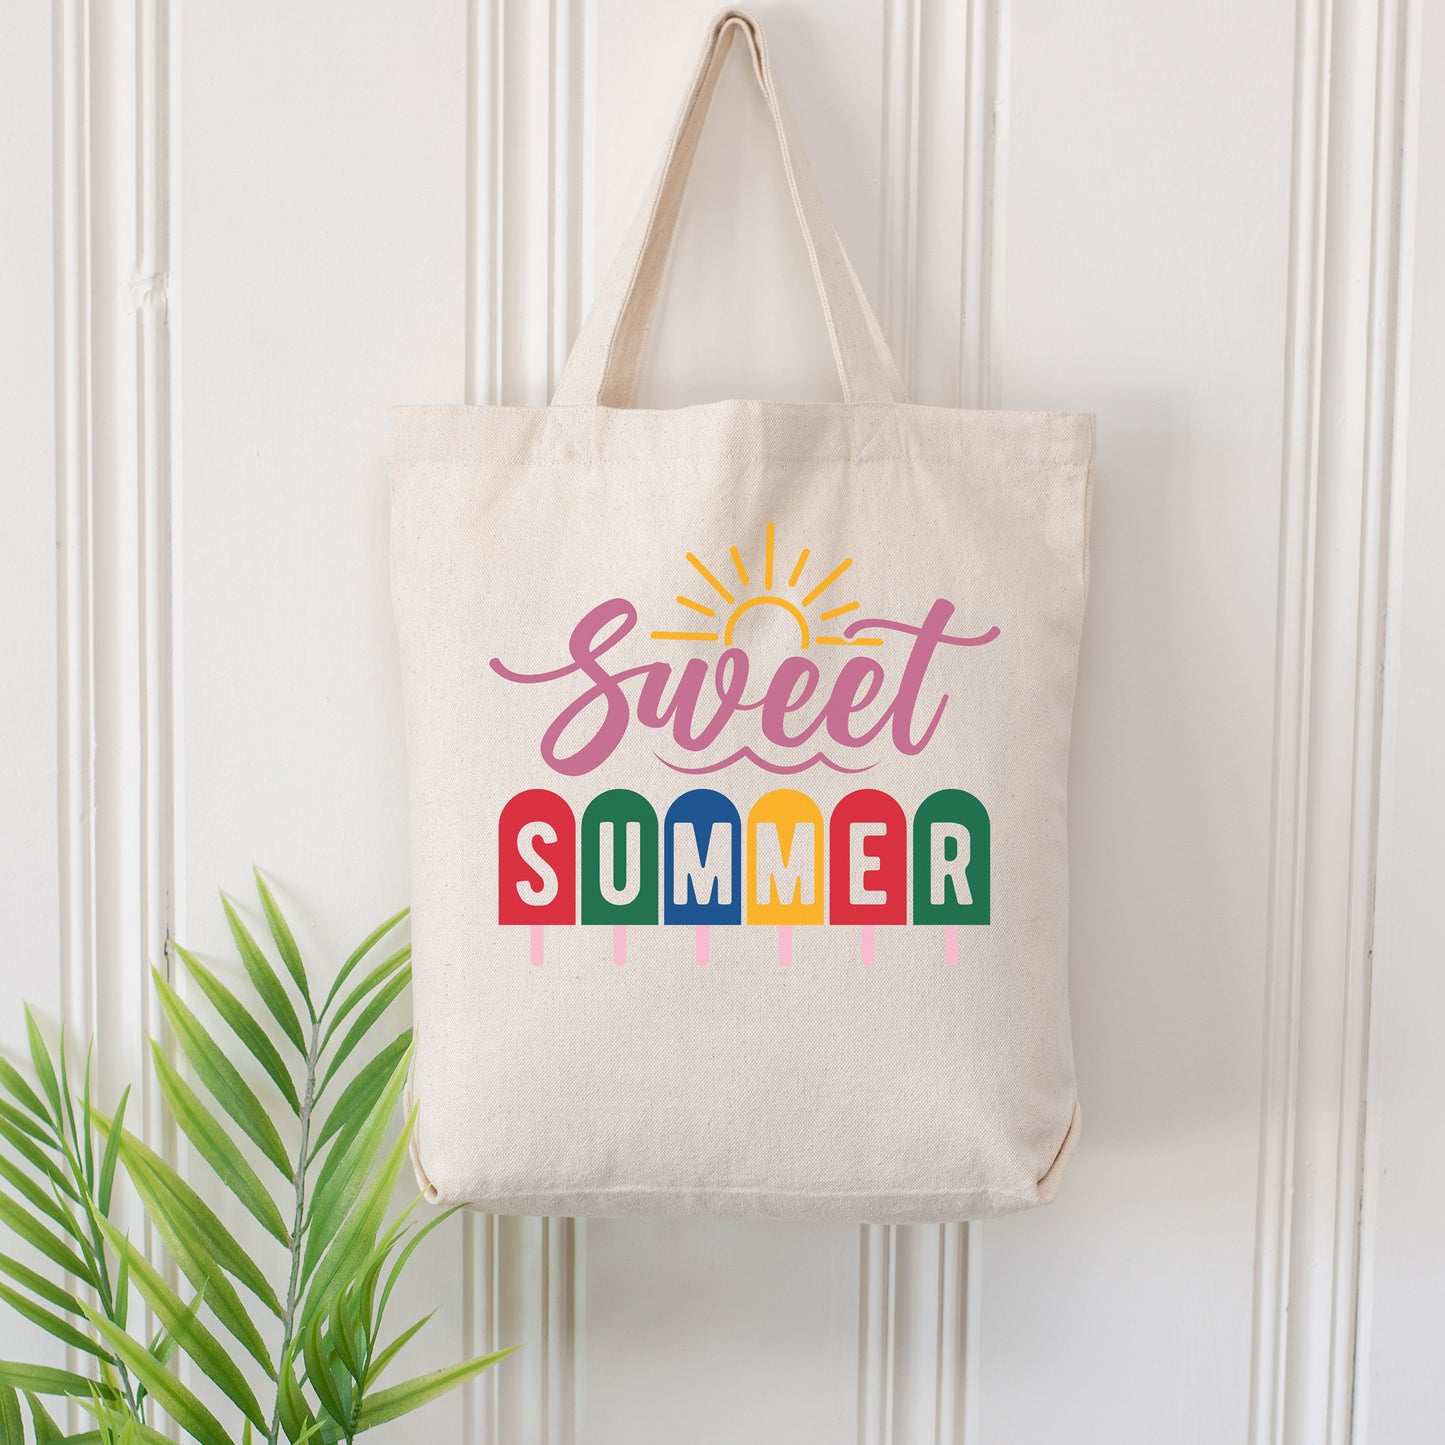 "Sweet Summer" Graphic